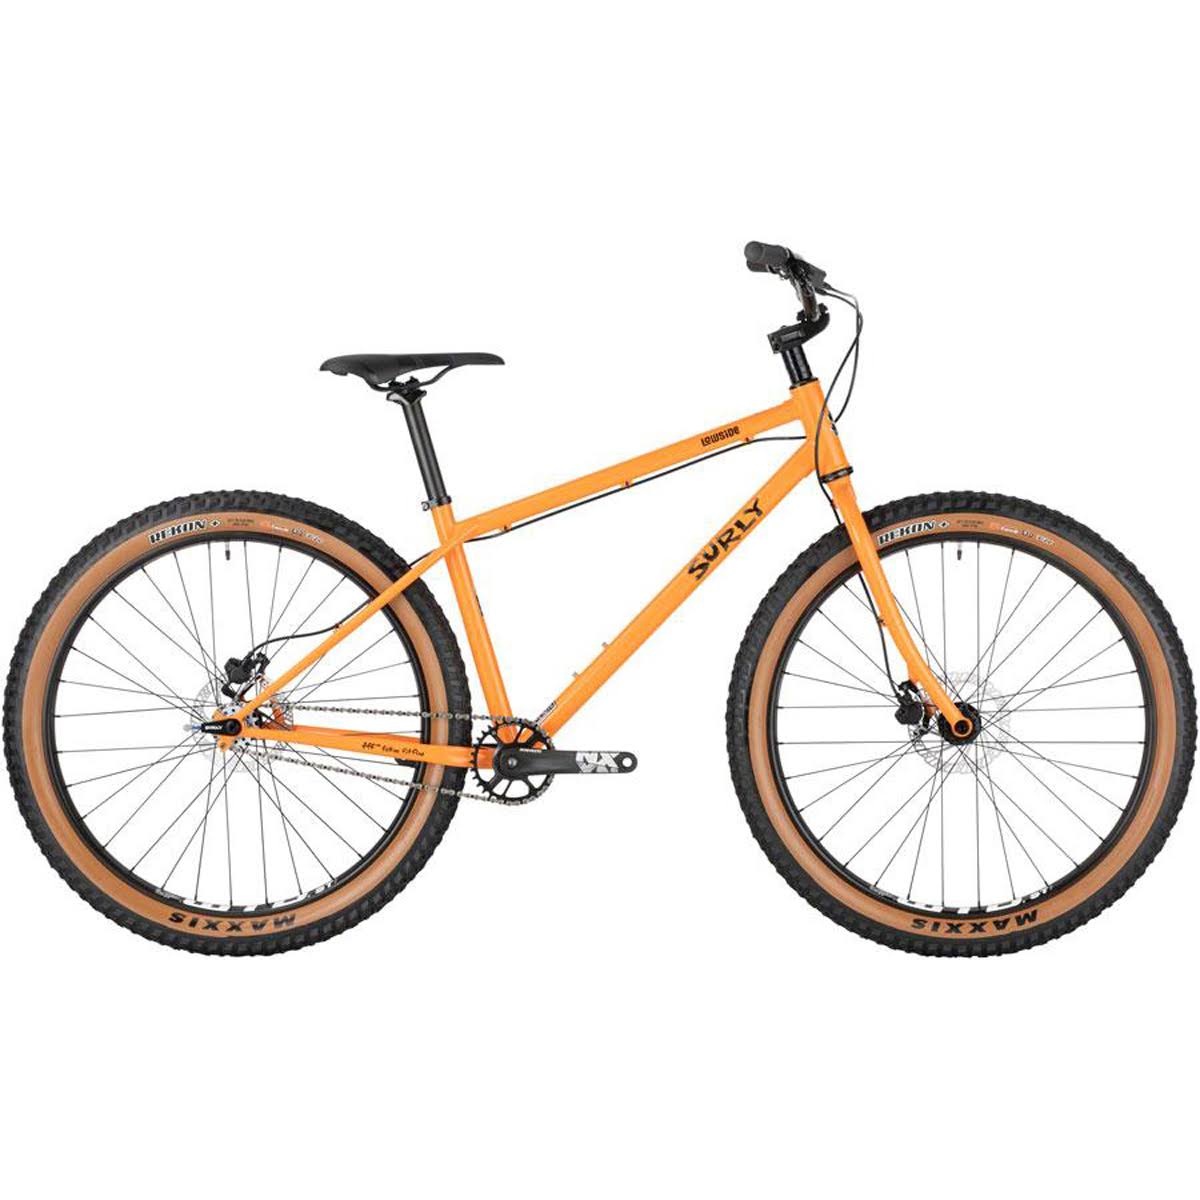 Surly Lowside Bike - Dream Tangerine Large